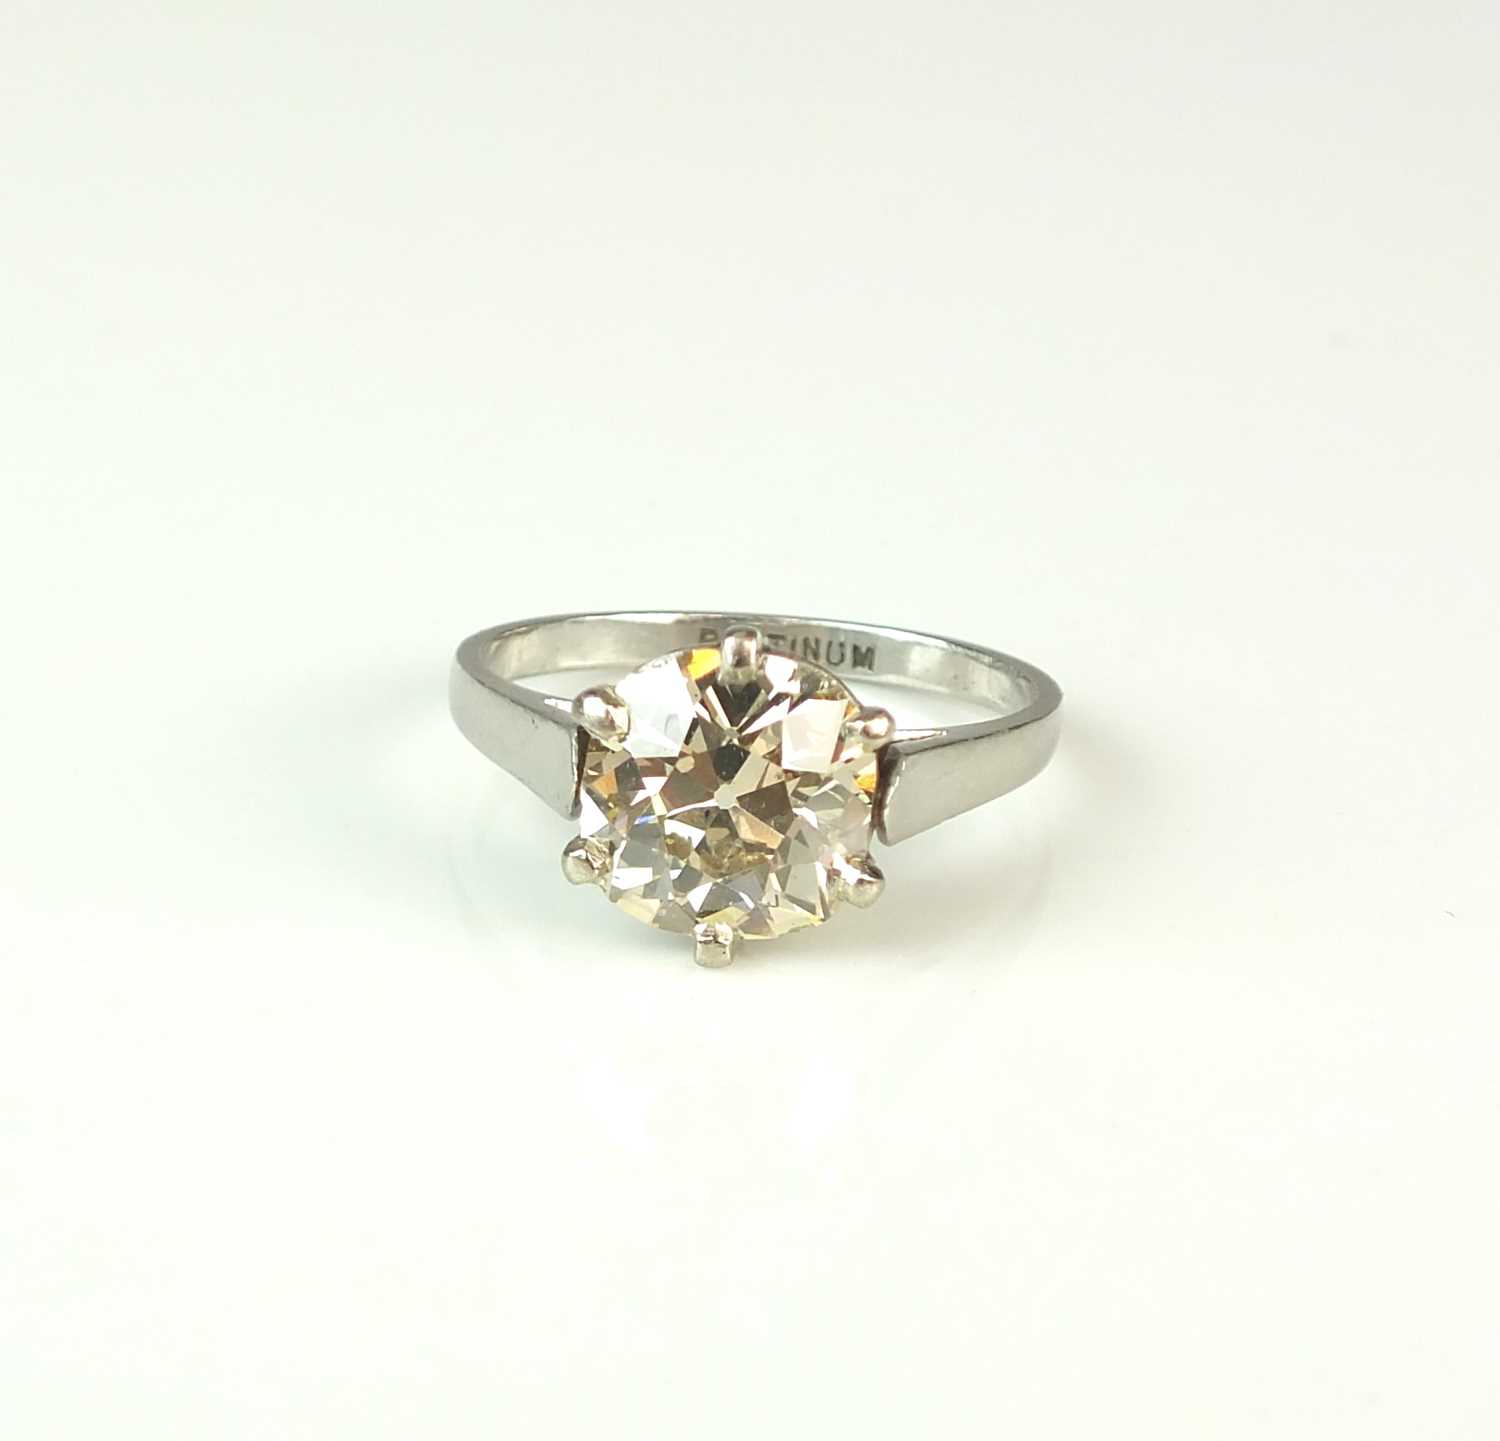 An early 20th century single stone diamond ring - Image 2 of 14